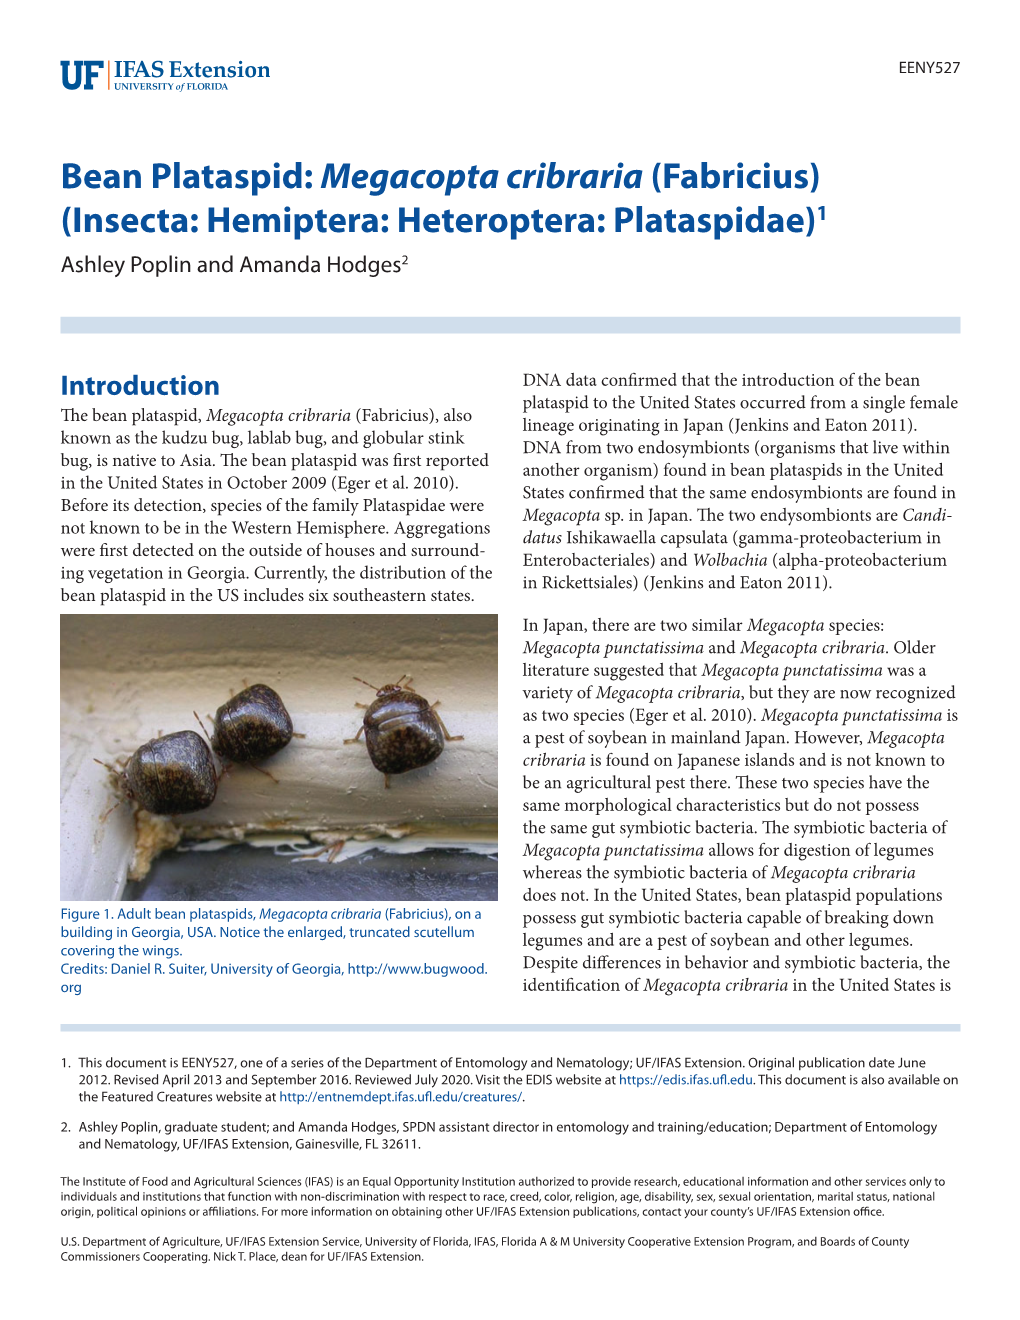 Megacopta Cribraria (Fabricius) (Insecta: Hemiptera: Heteroptera: Plataspidae)1 Ashley Poplin and Amanda Hodges2